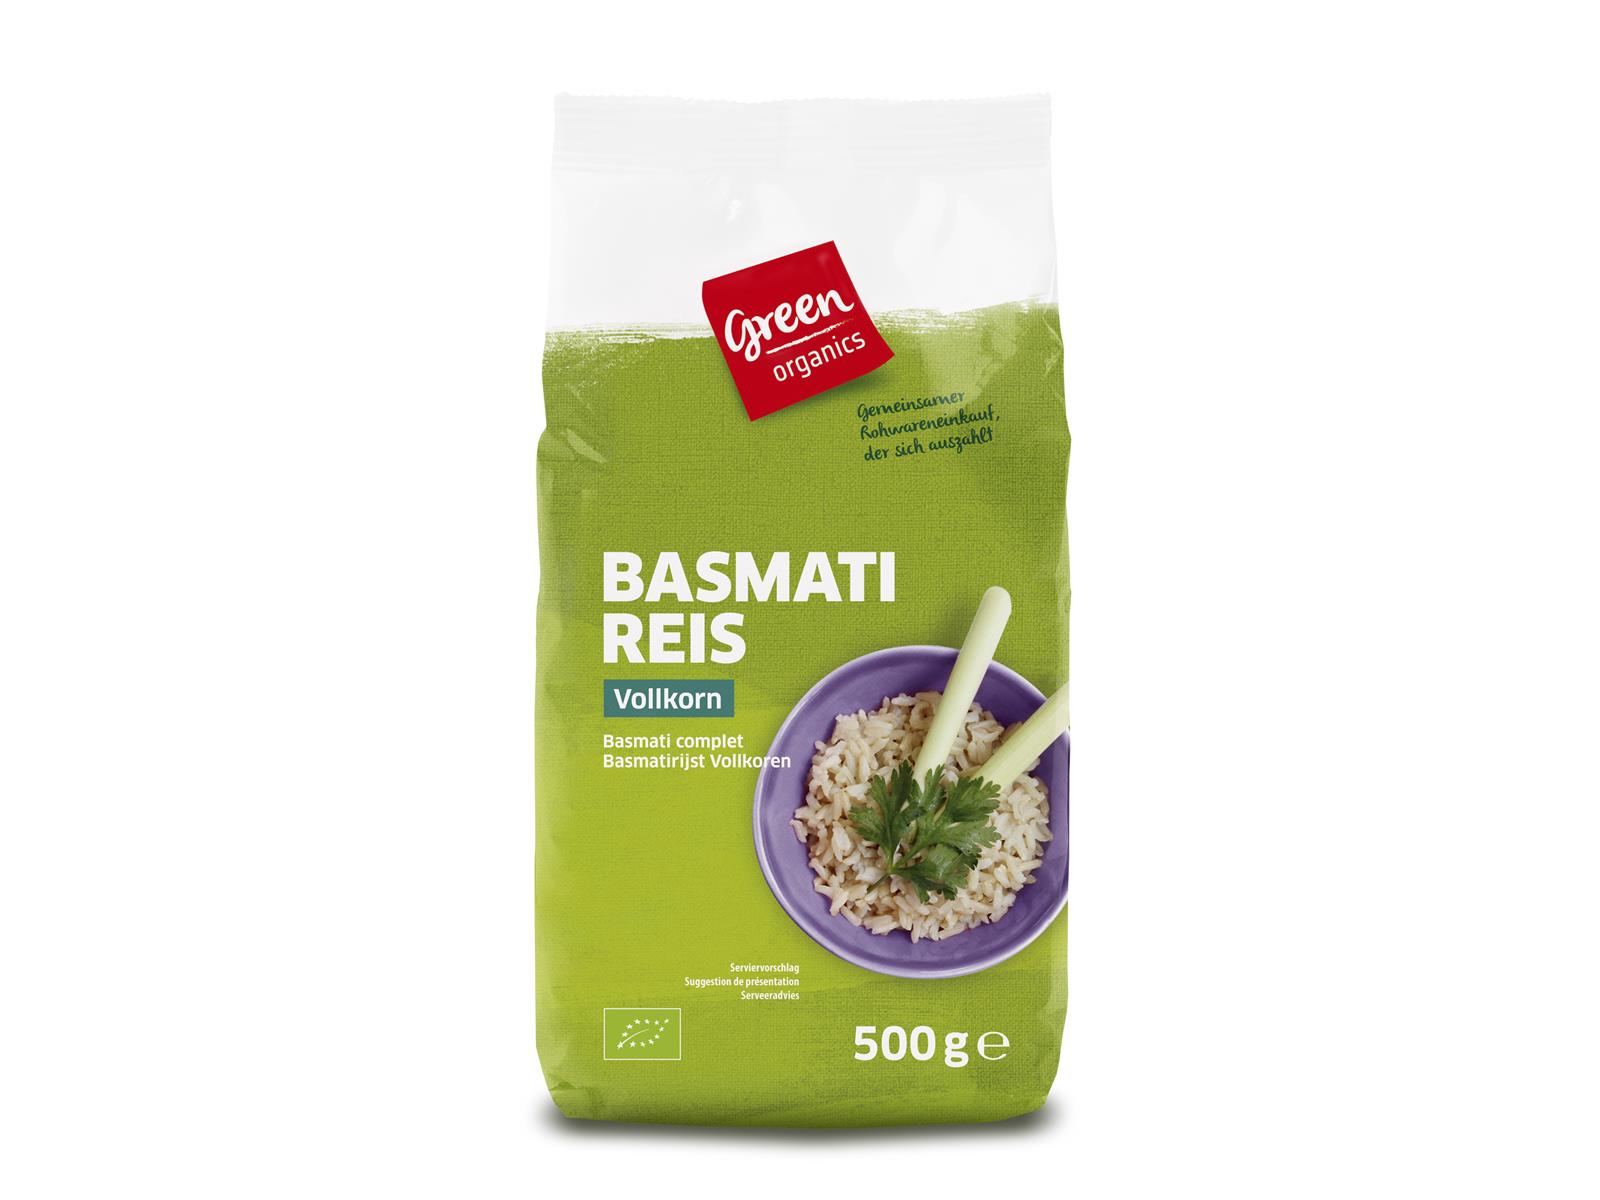 greenorganics Basmati Reis braun 500 g